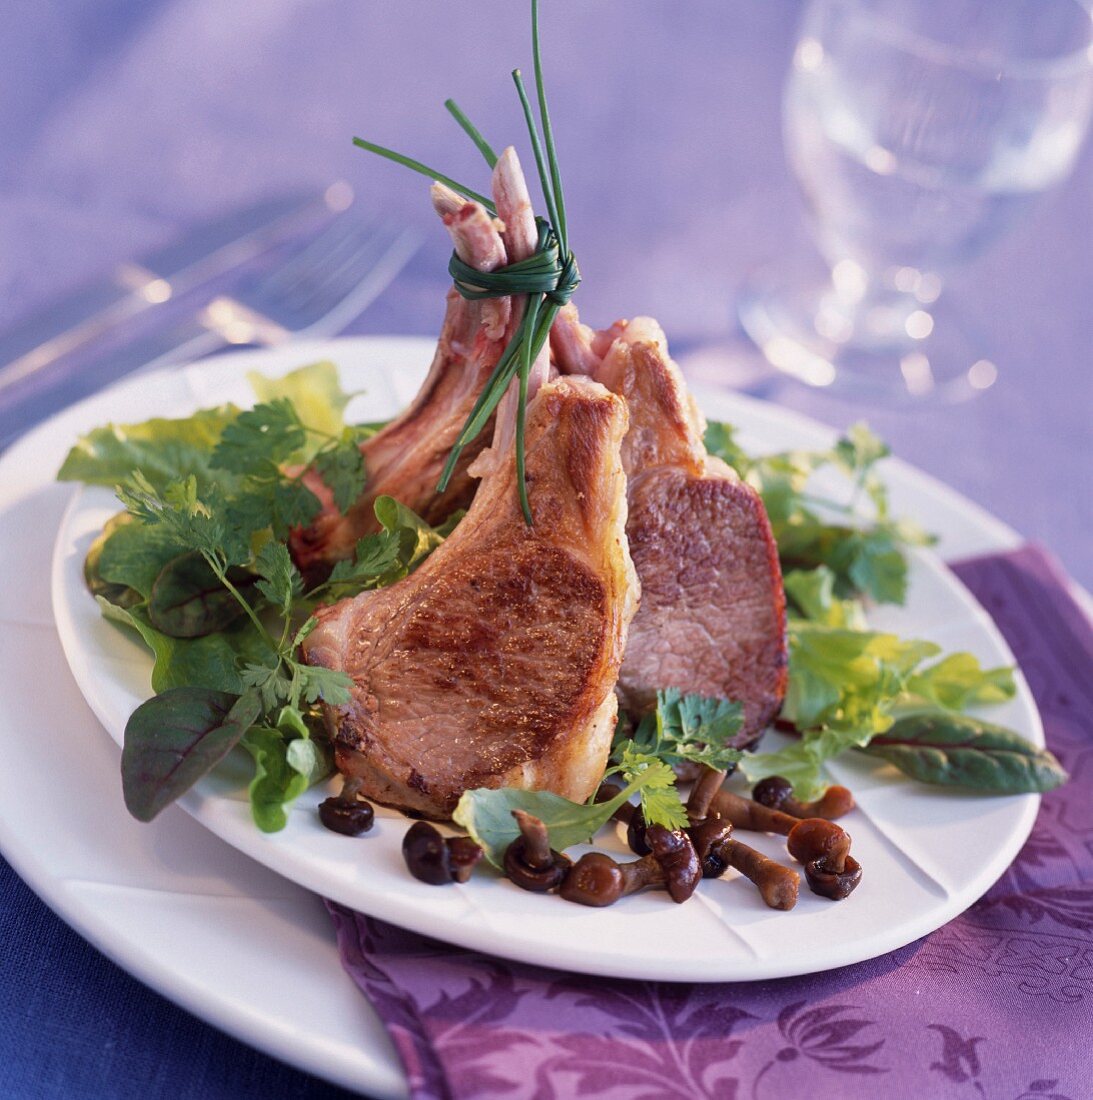 Lammkoteletts mit Pilzen und Salatgarnitur